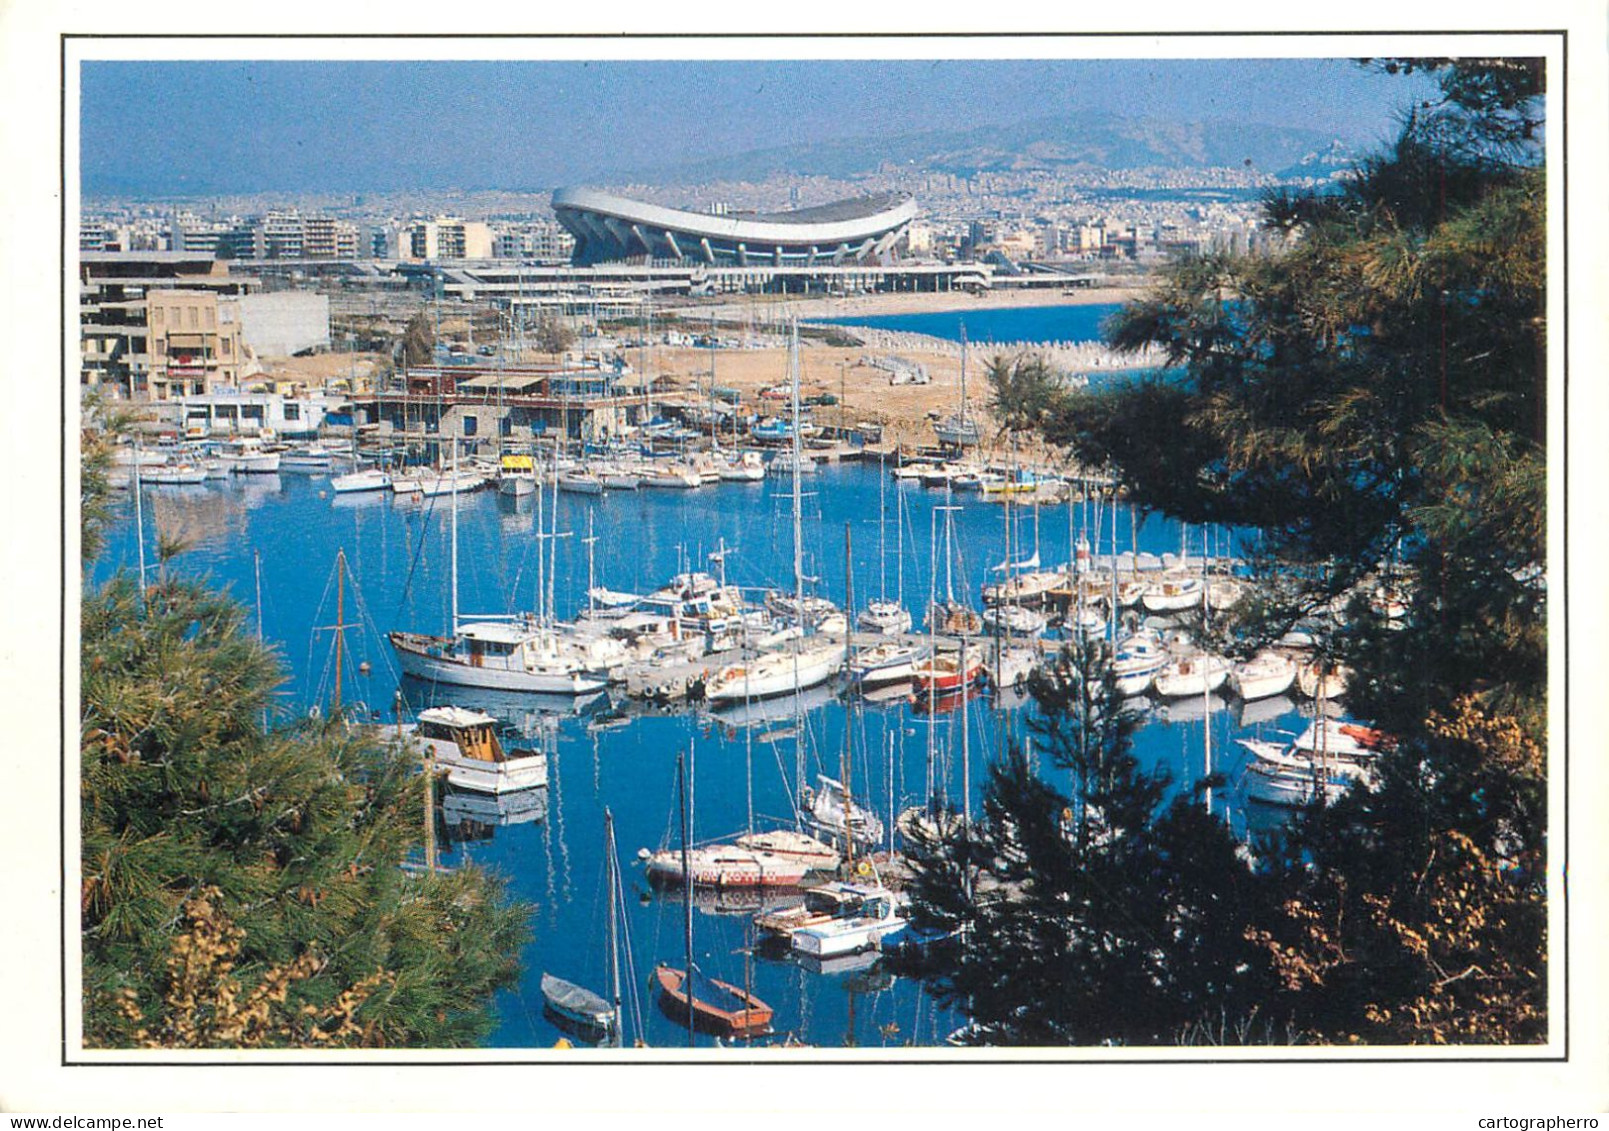 Navigation Sailing Vessels & Boats Themed Postcard Pireus Mikrolimano - Velieri